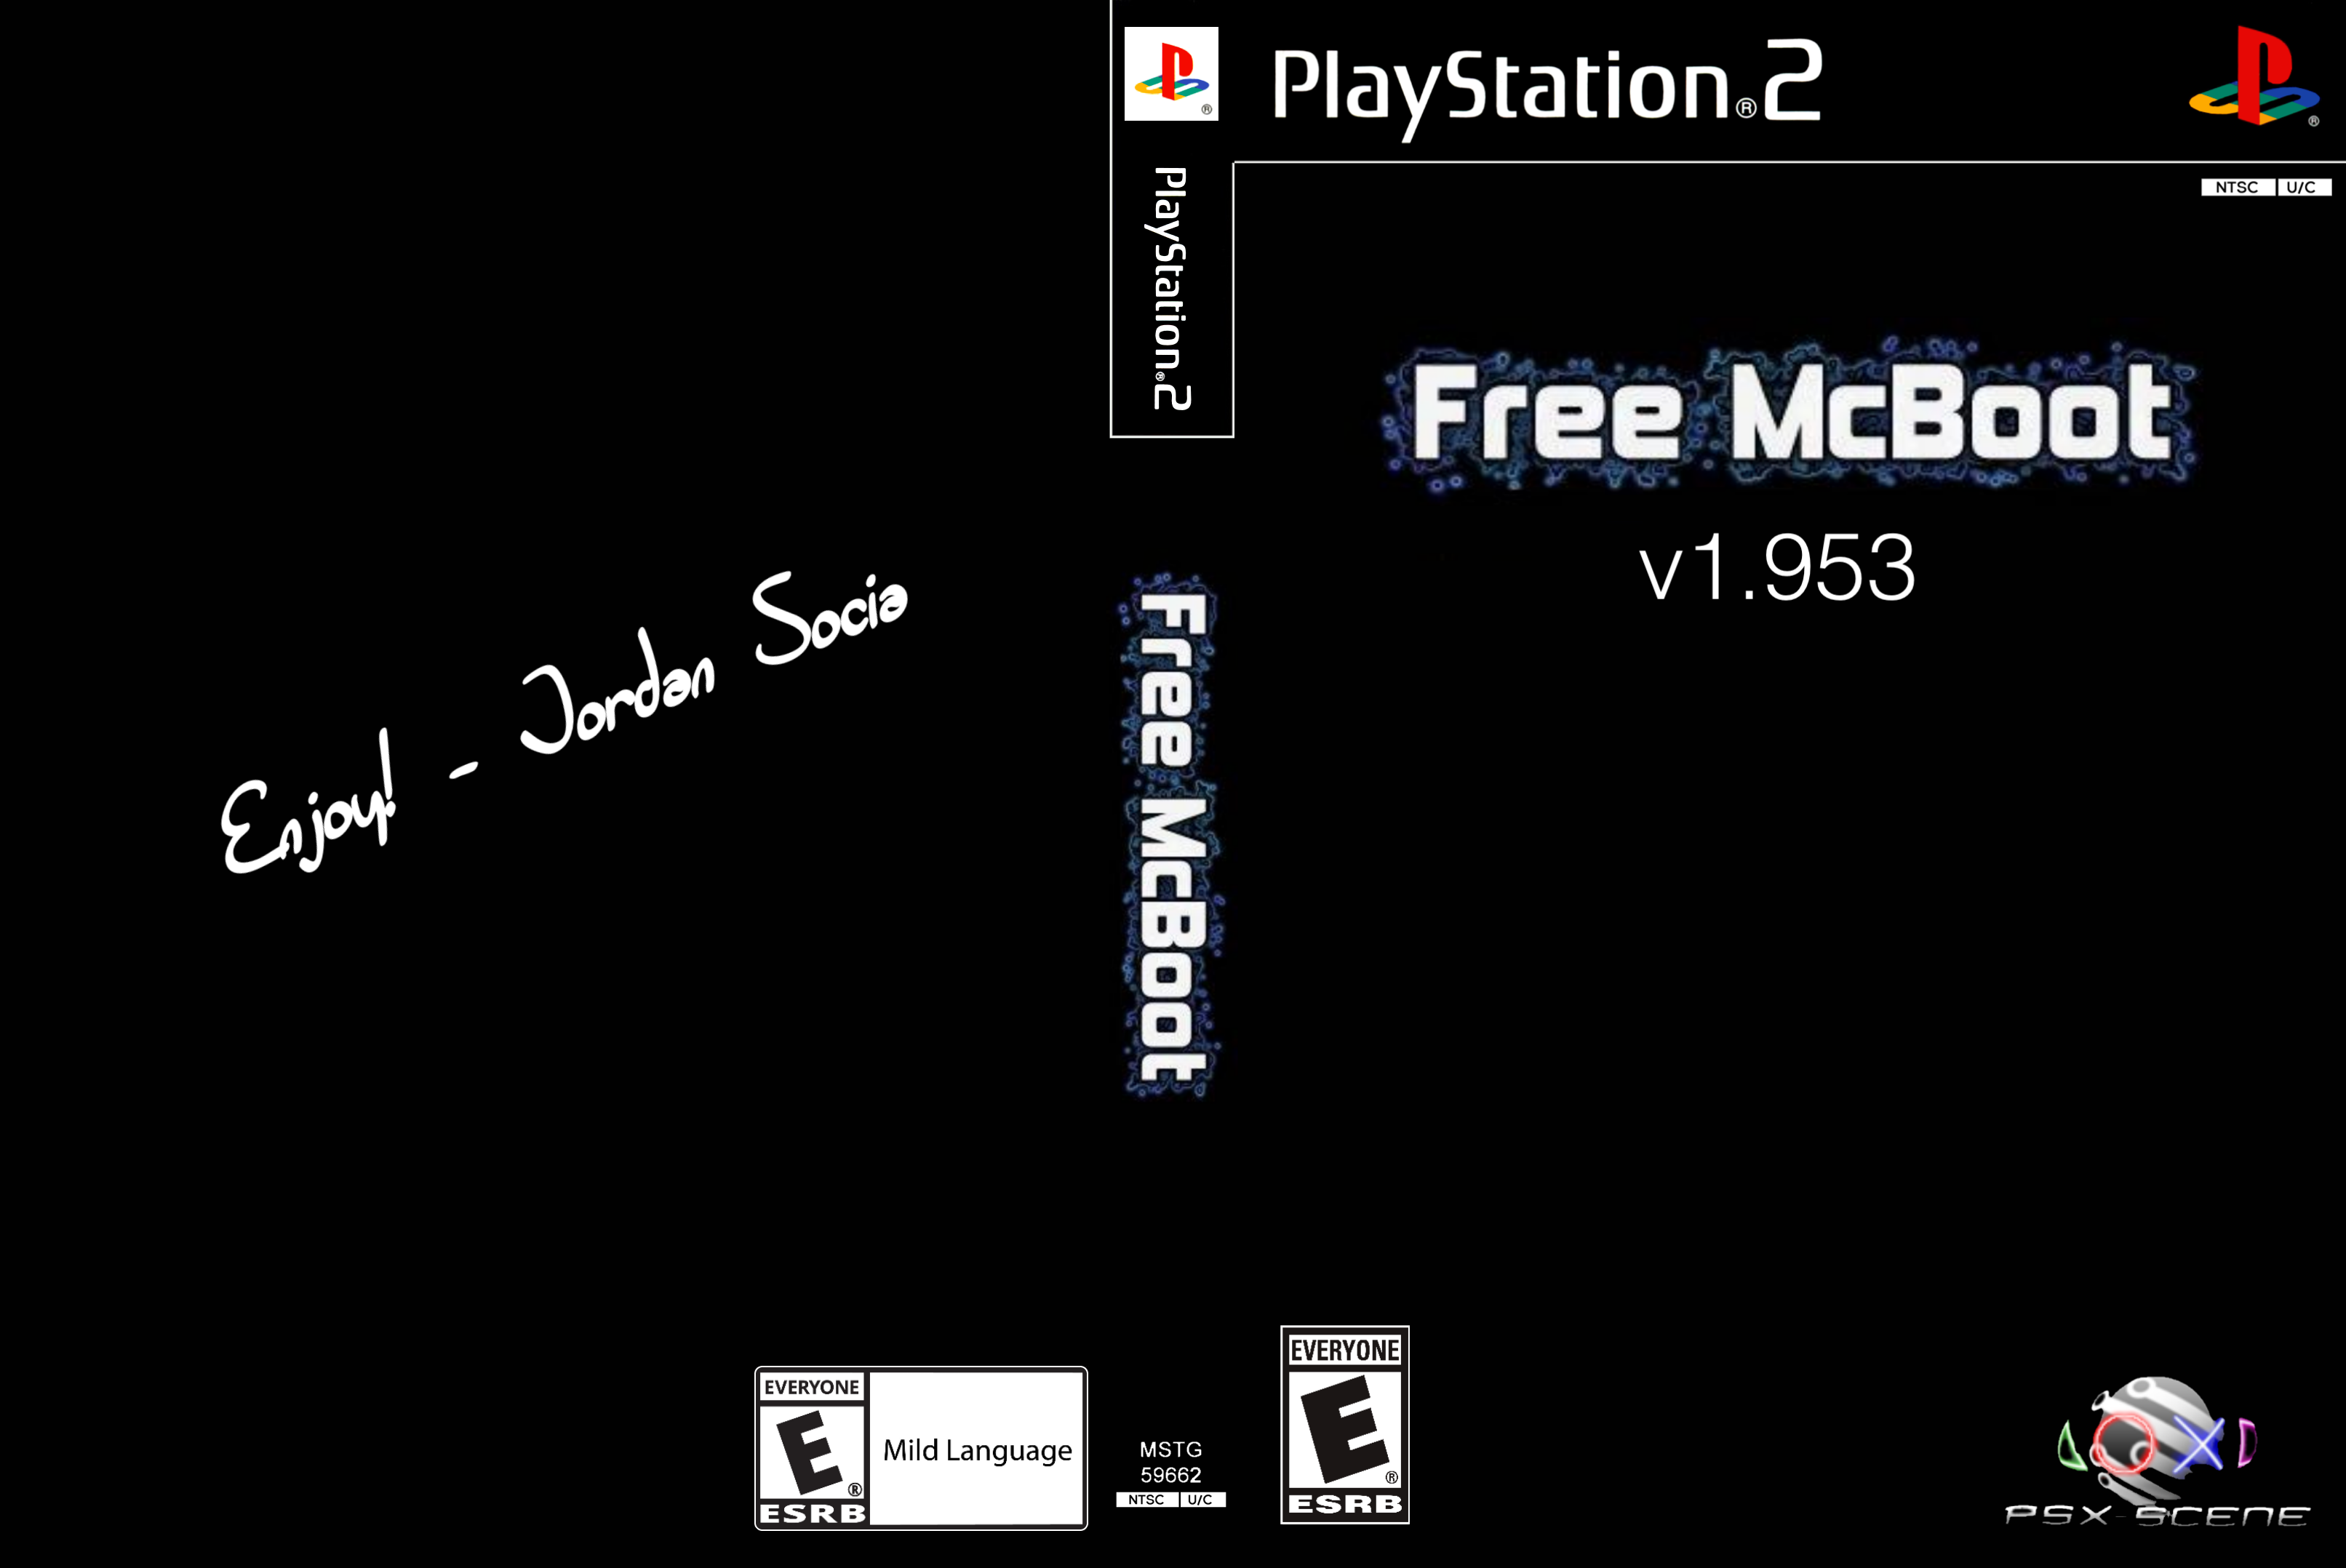 FMCB v1.953 (Free Mcboot) box cover